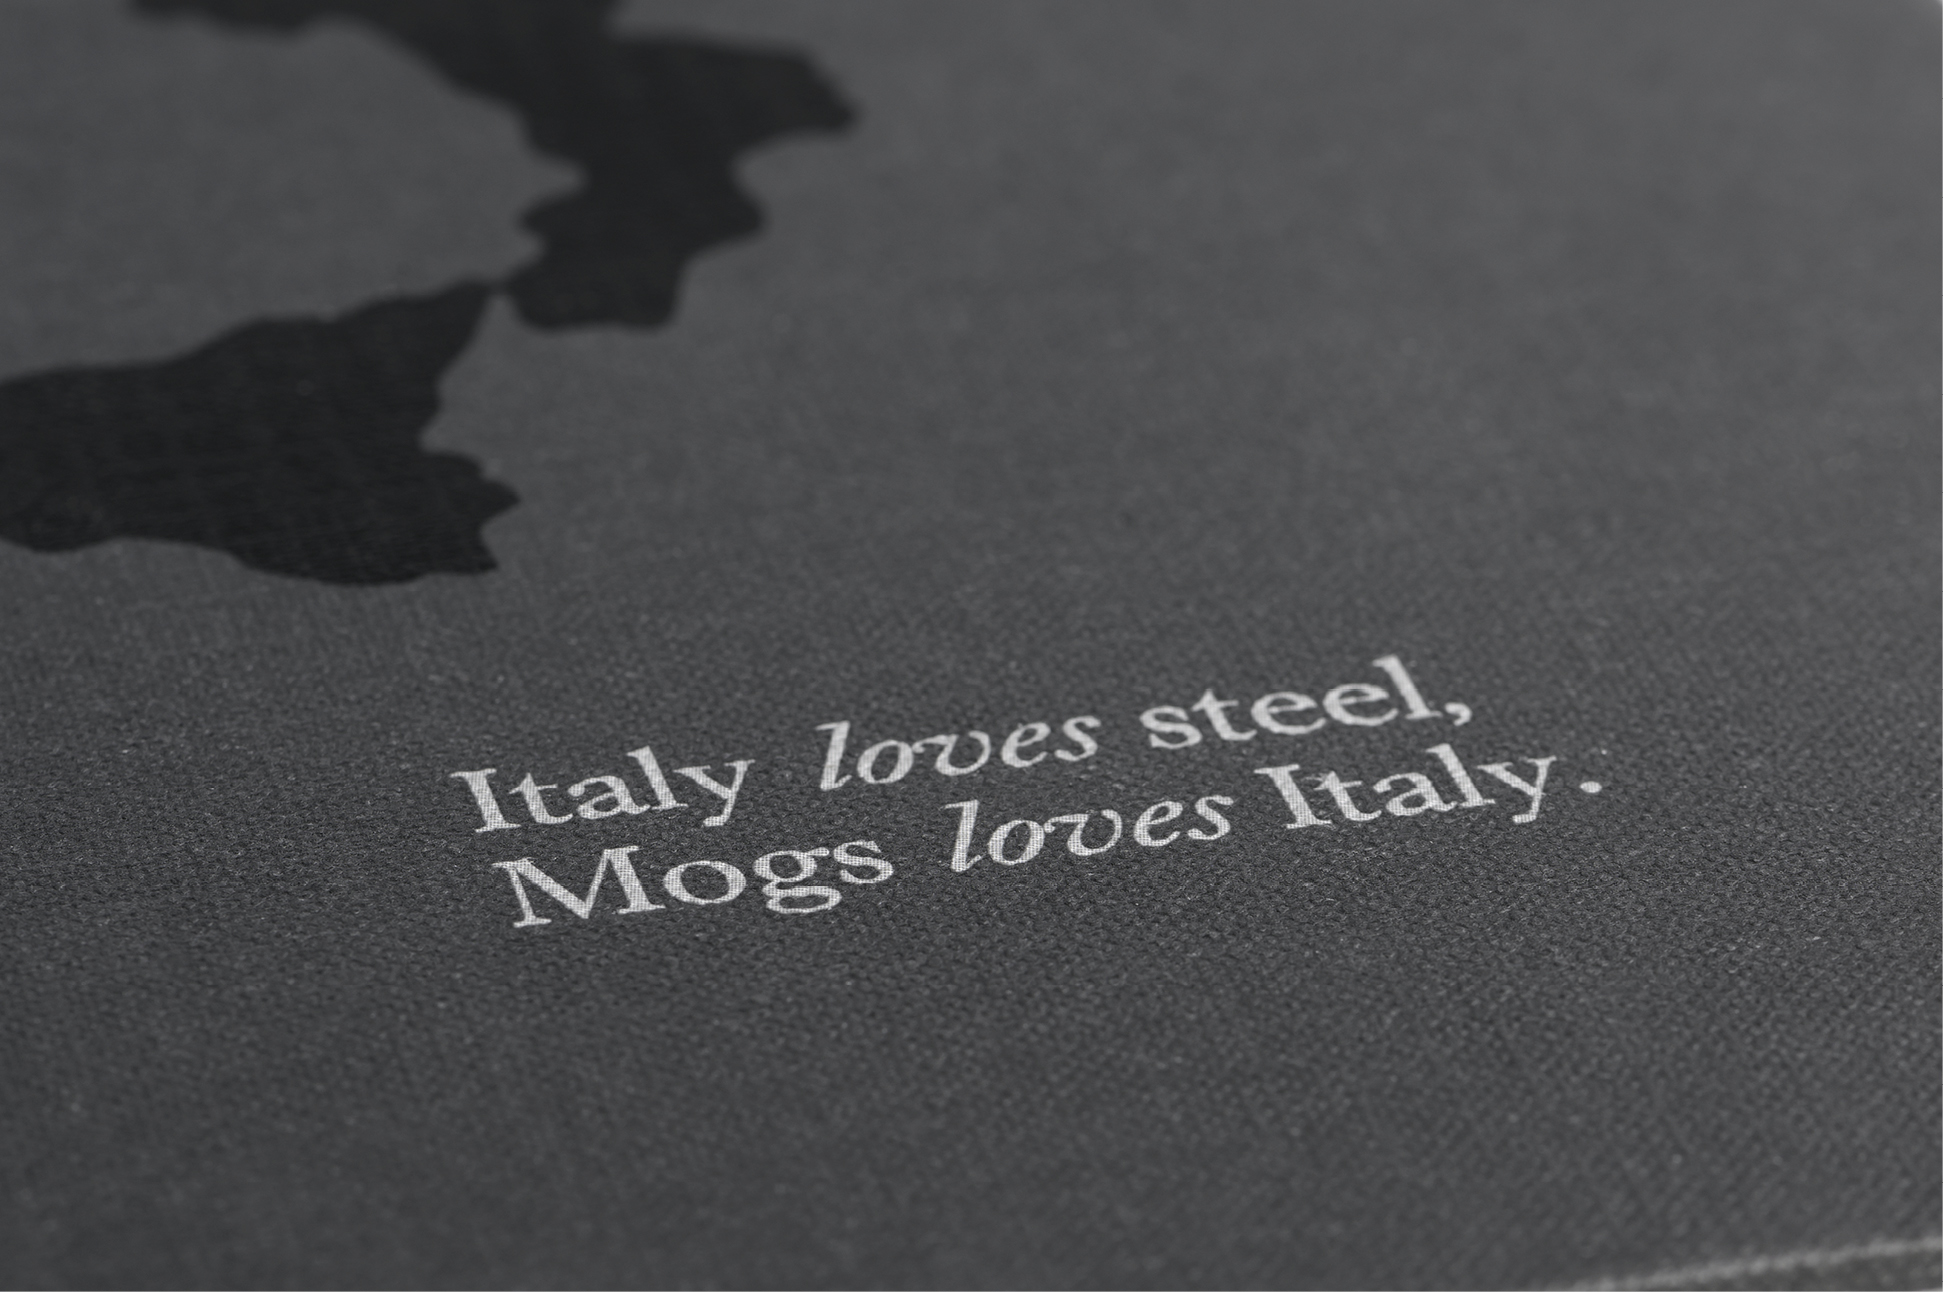 Italy loves steel